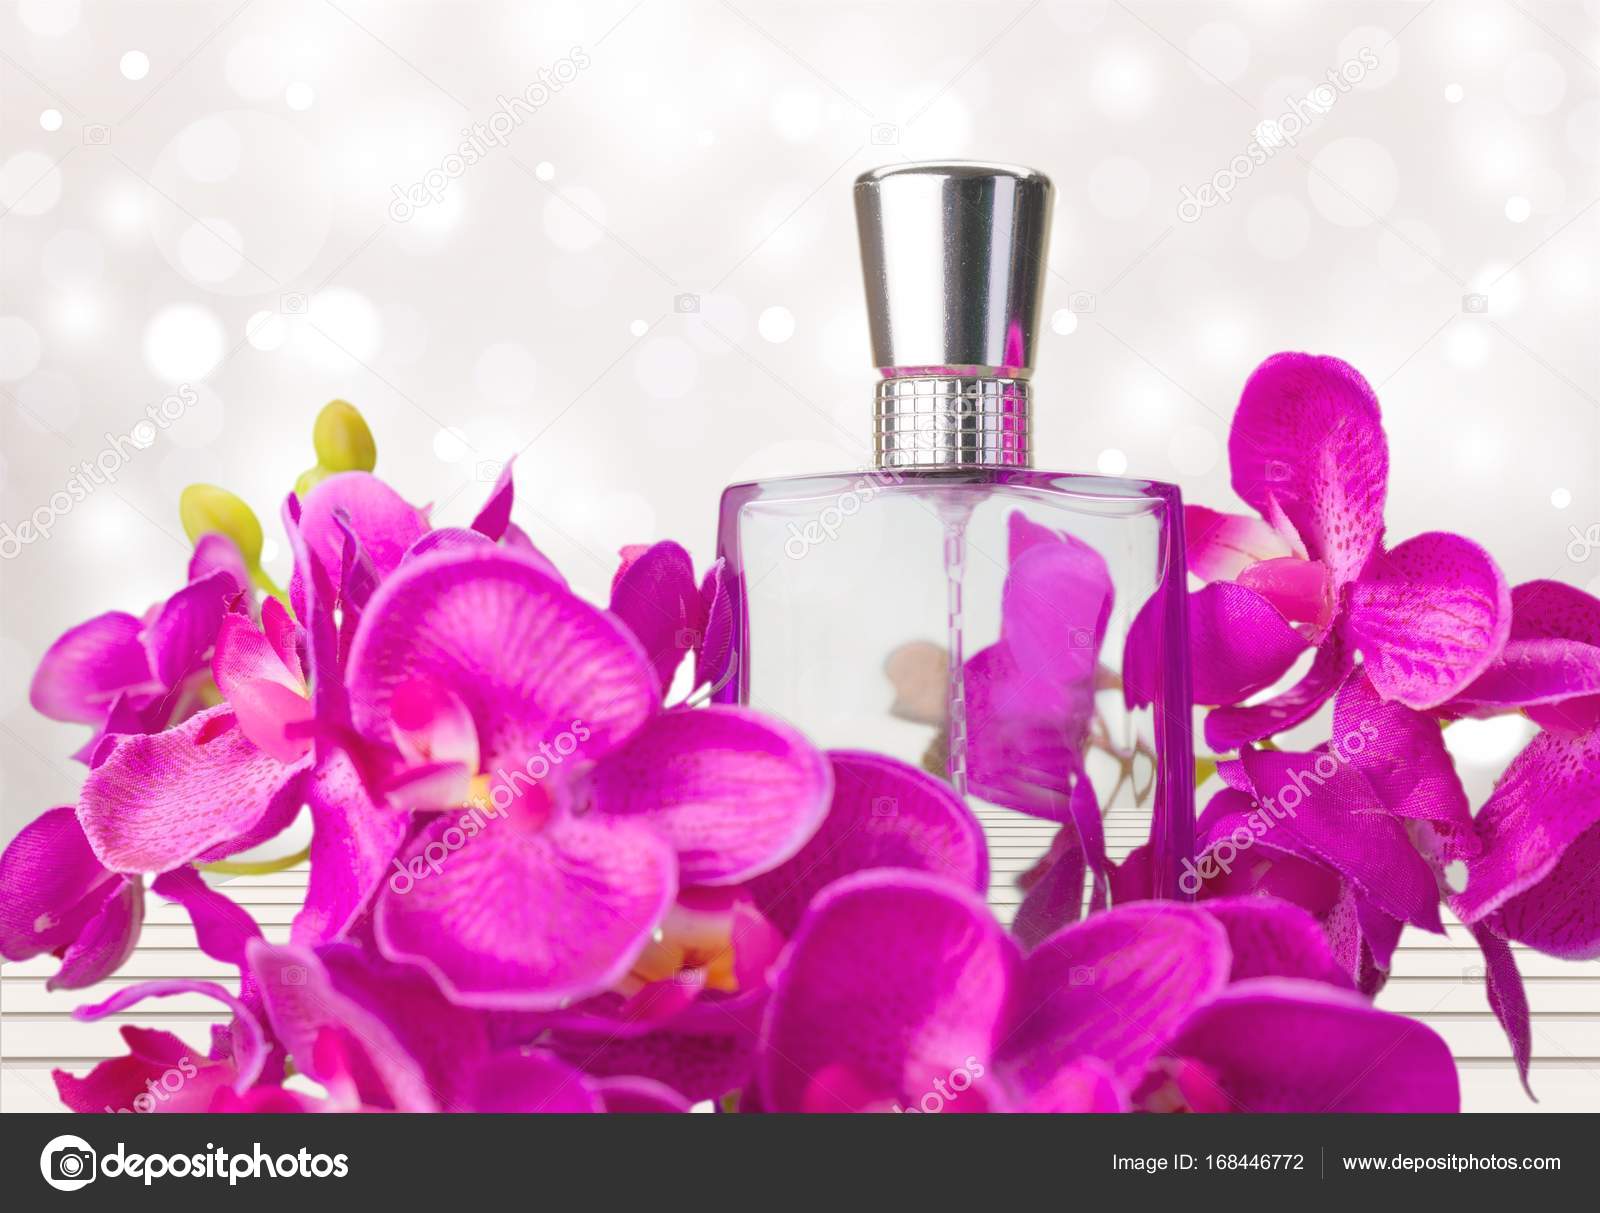 perfume purple bottle with flowers